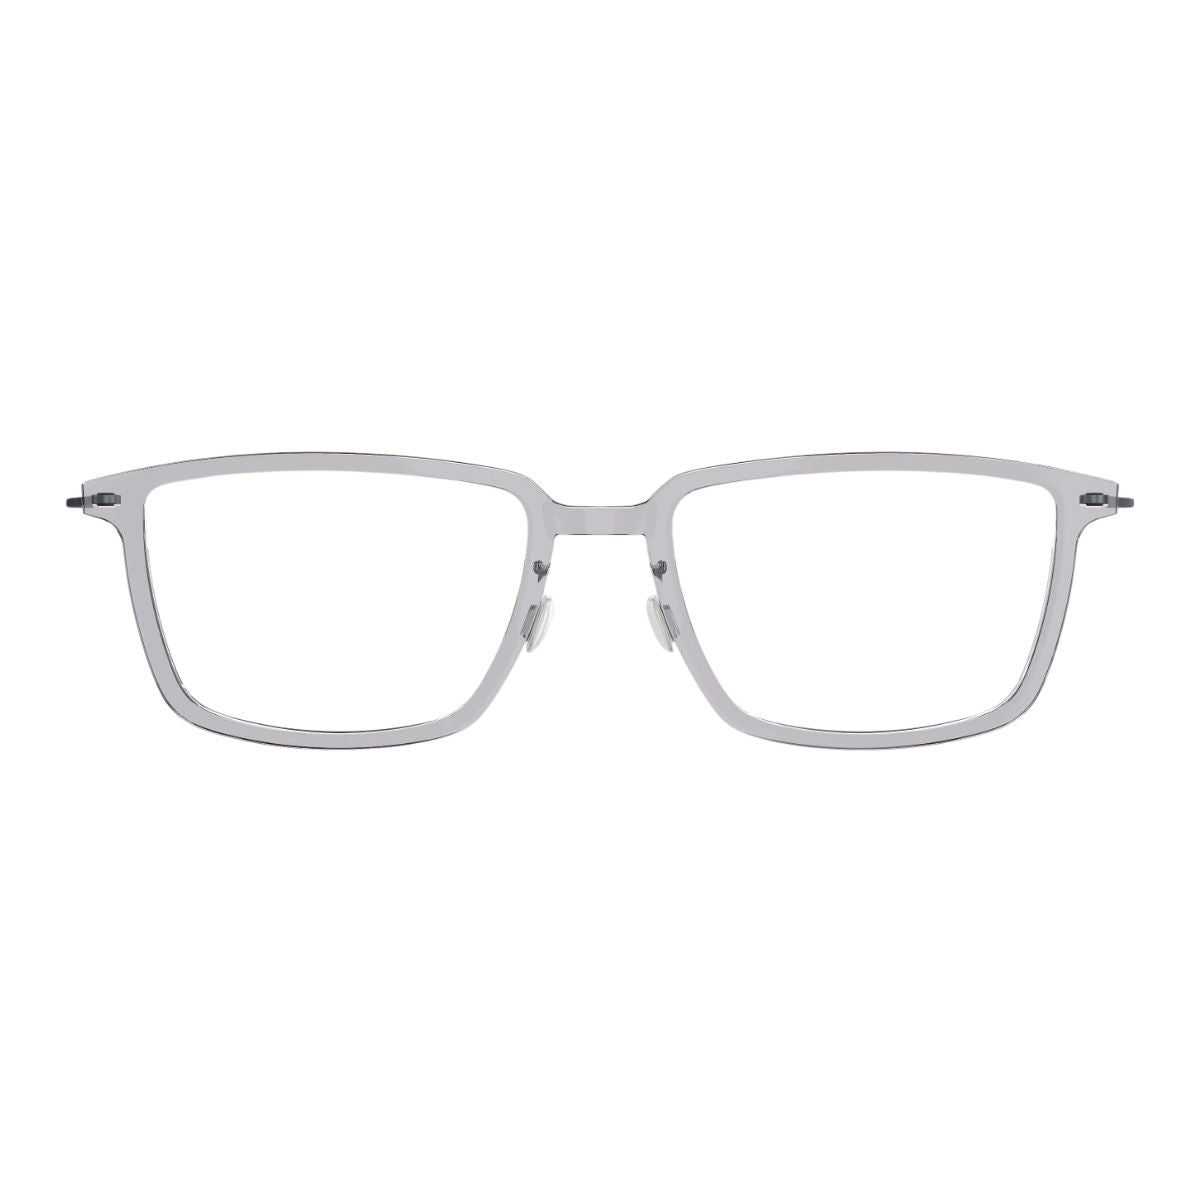 "Buy Stylish Lindberg Optical Frame For Men & Women Available at Optorium"